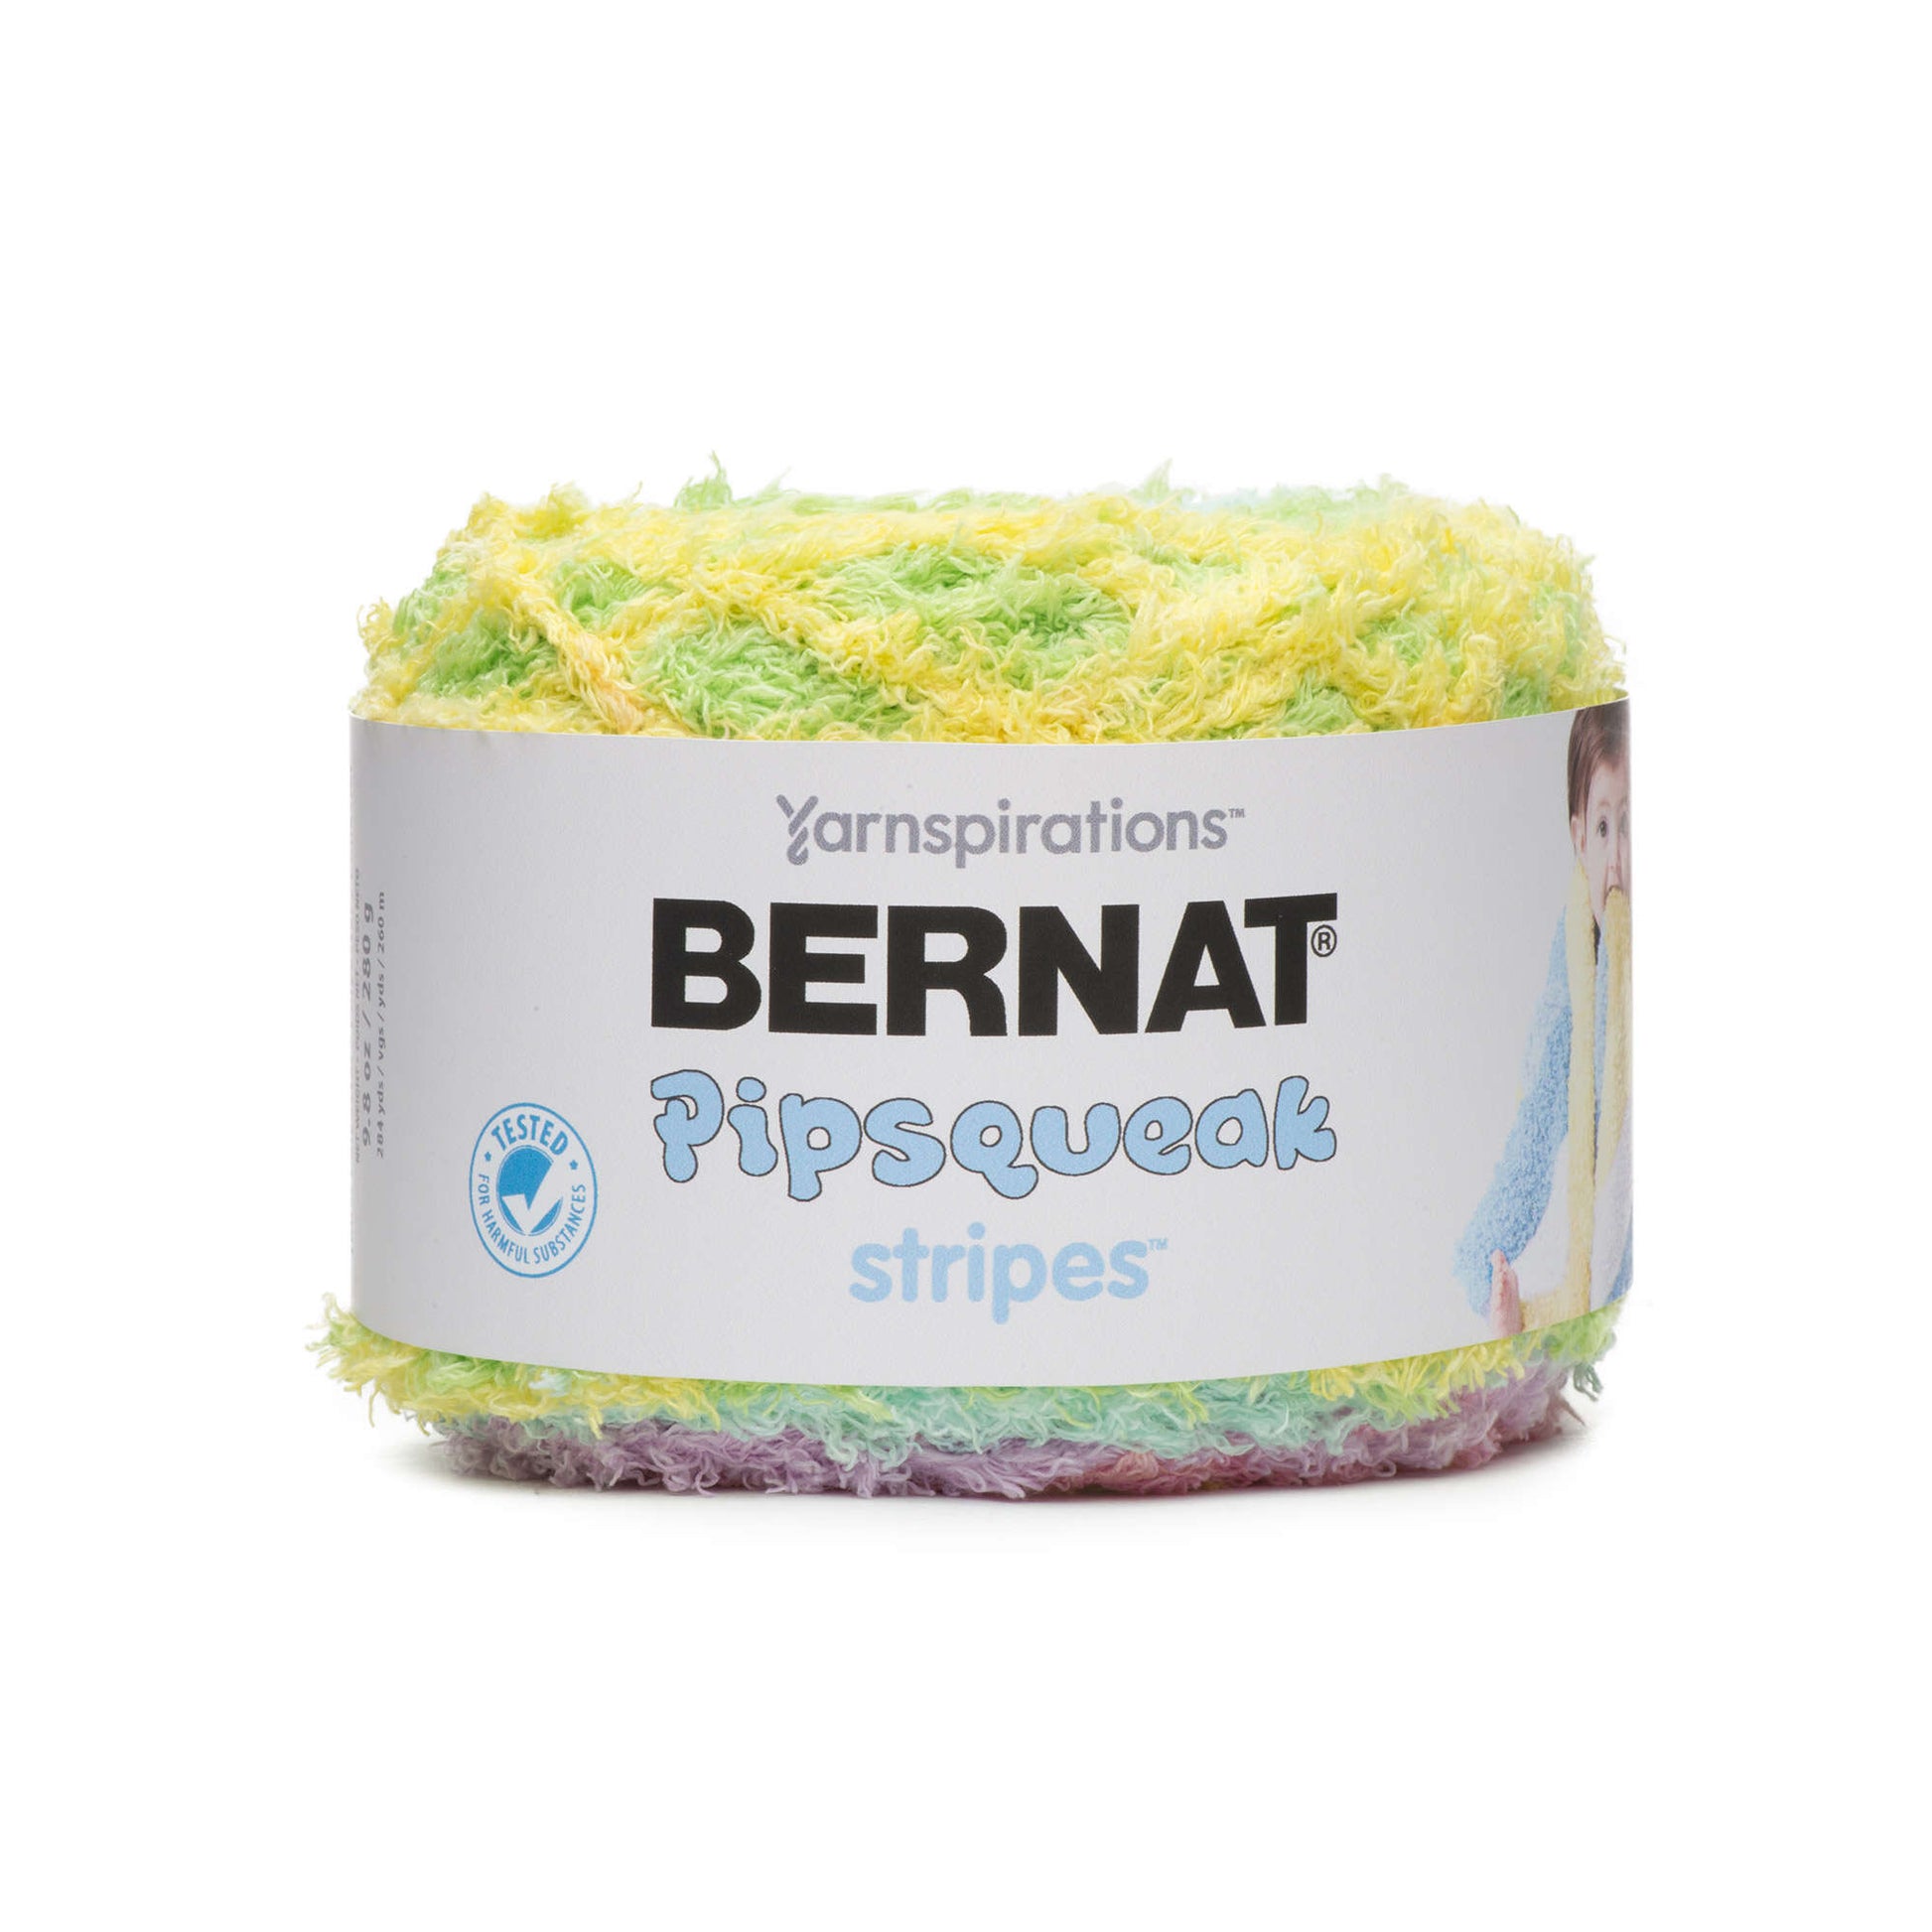 Bernat Pipsqueak Stripes Yarn - Discontinued Shades